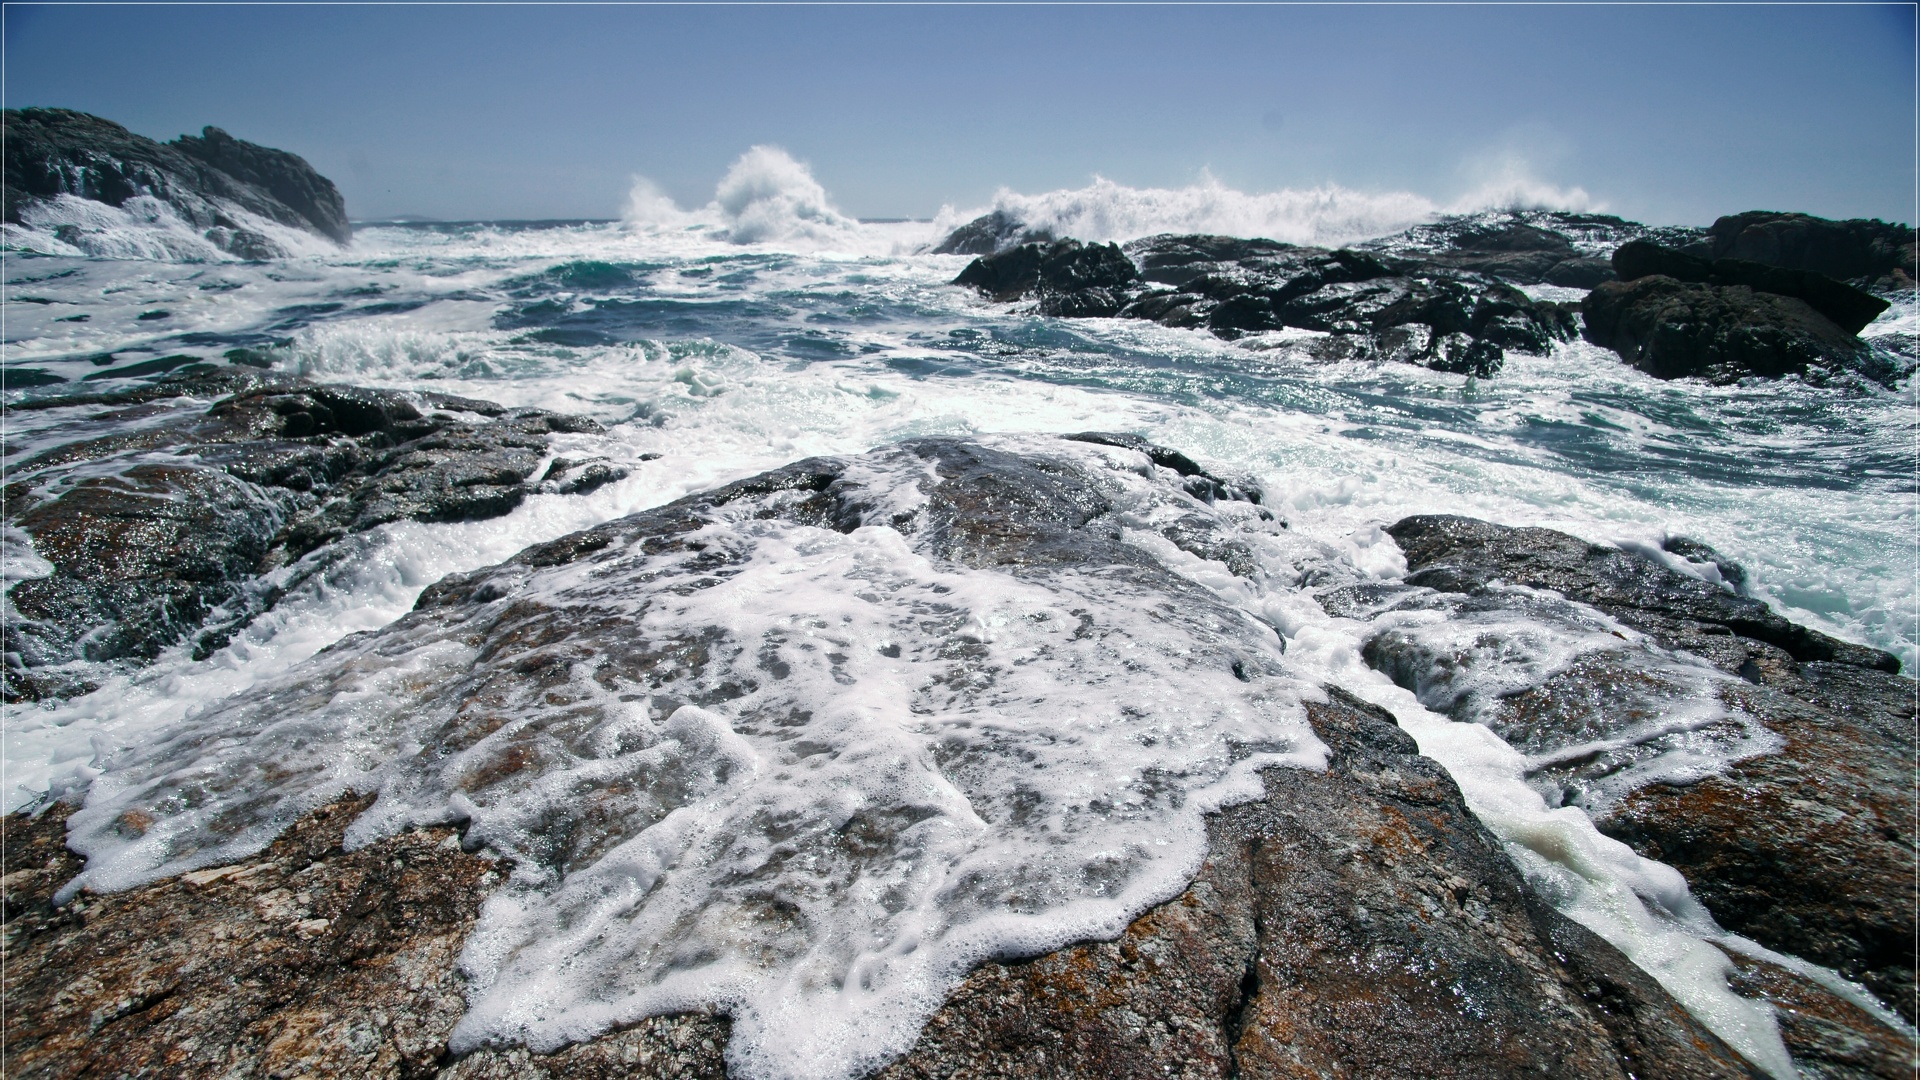 Bord de mer - vagues - rochers.jpg